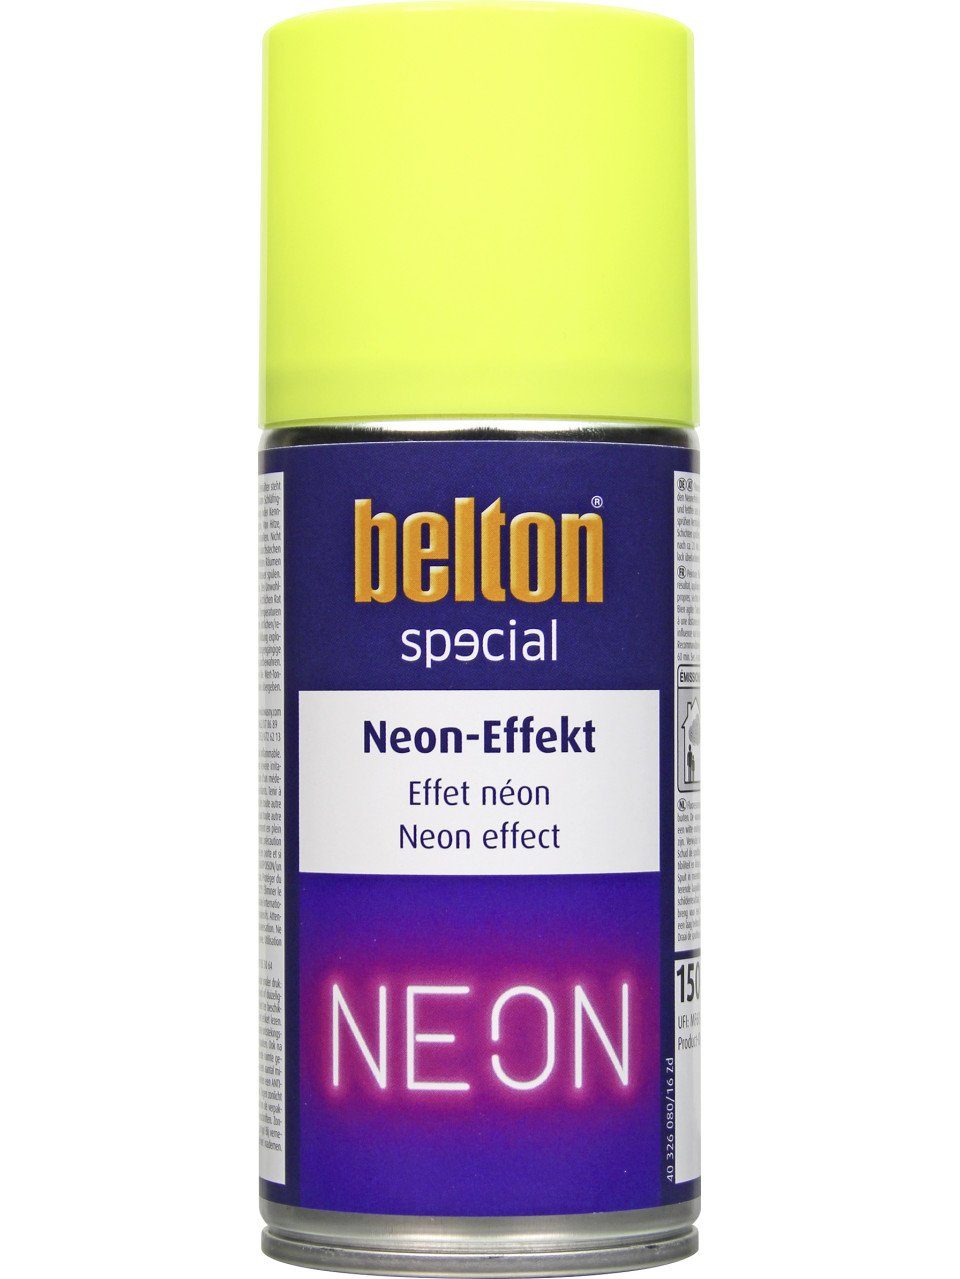 ml 150 Belton Neon-Effekt gelb Sprühlack special Spray belton